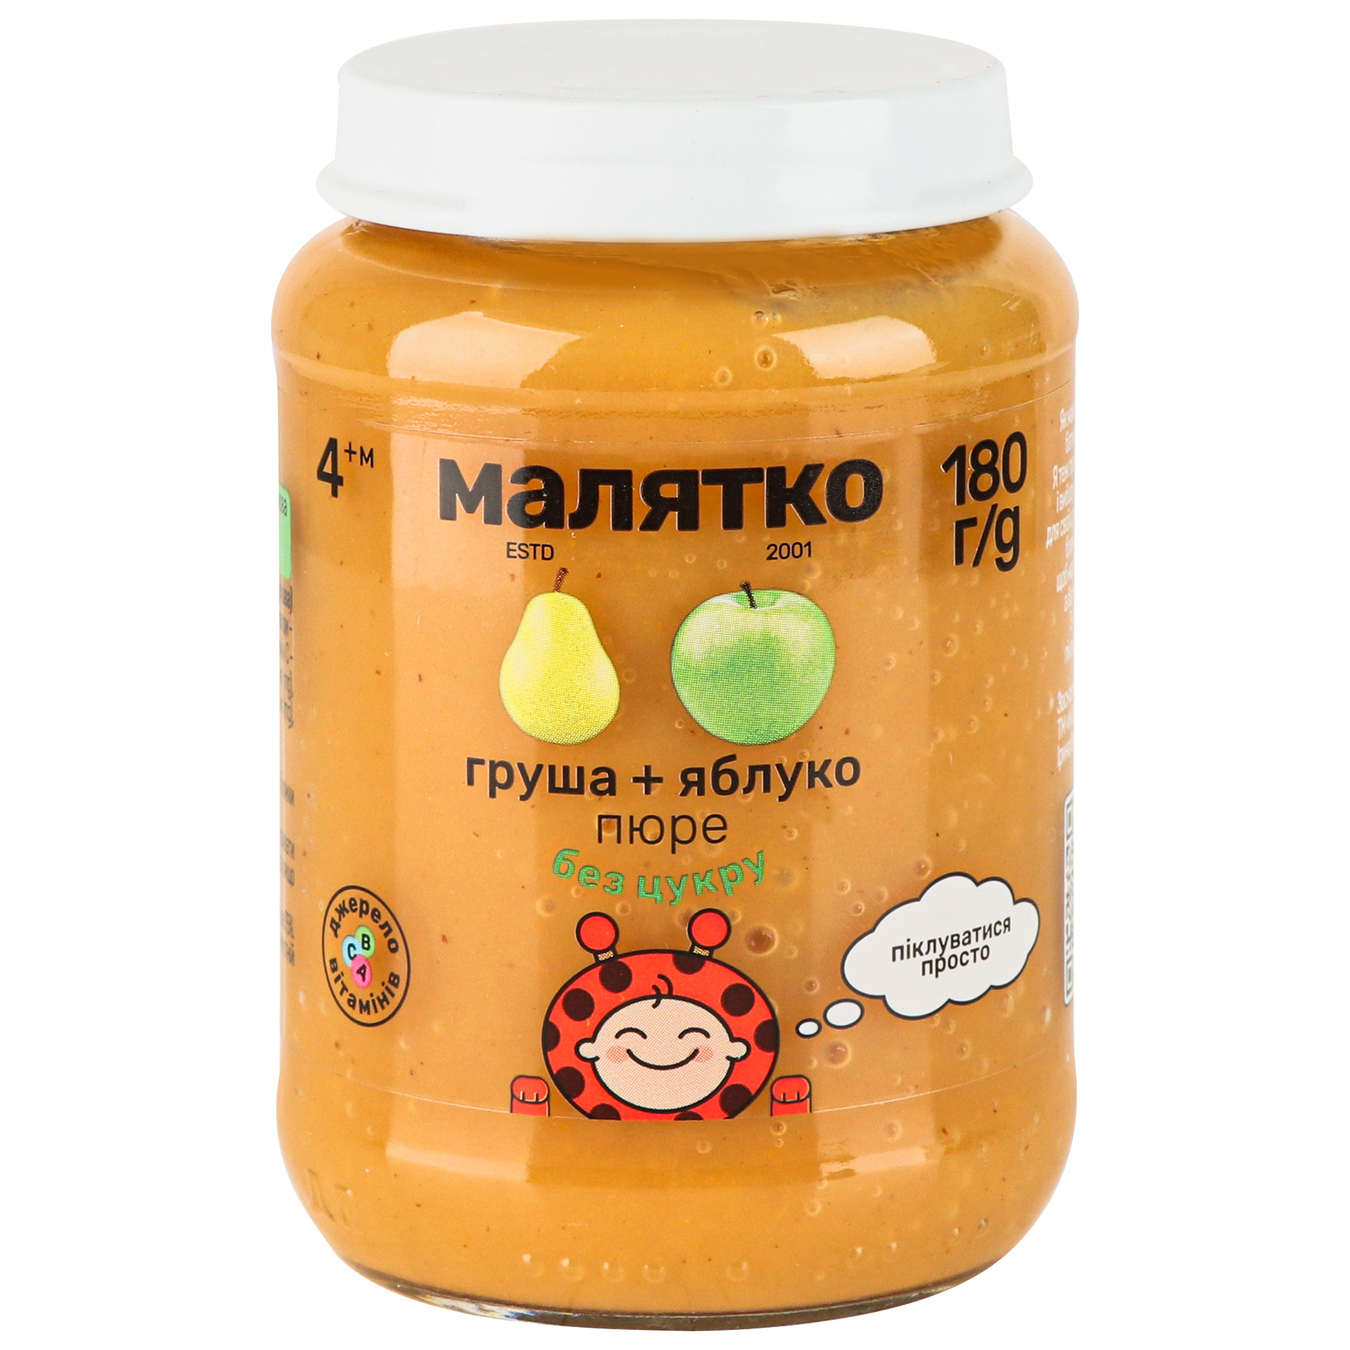 Malyatko for children from 4 months apple pear puree 180g 2